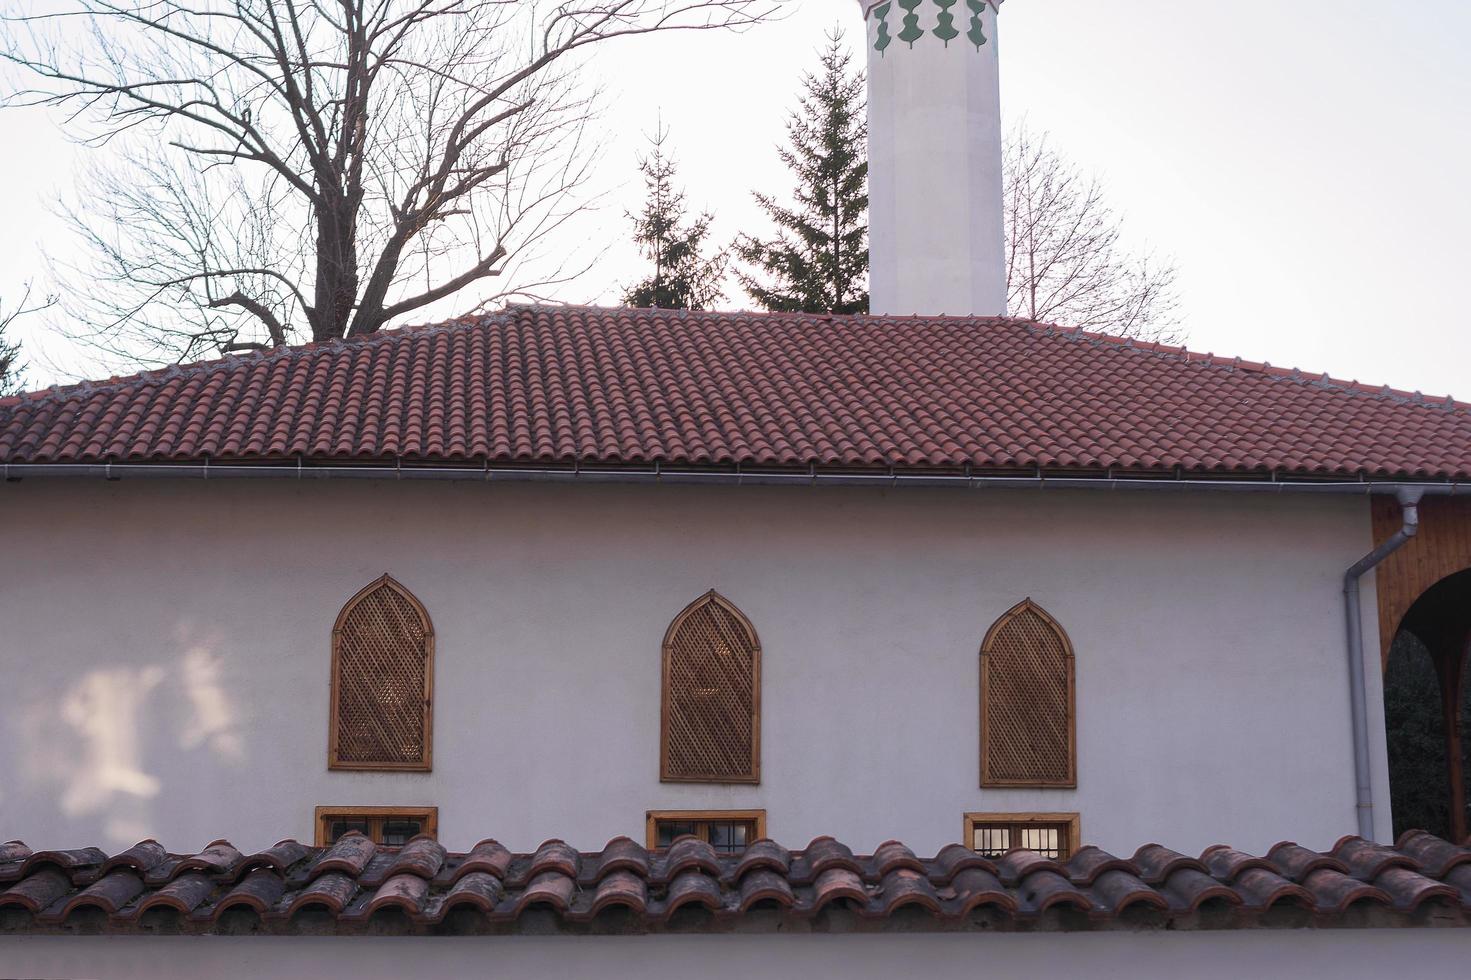 belle mosquée lieu de culte musulman photo